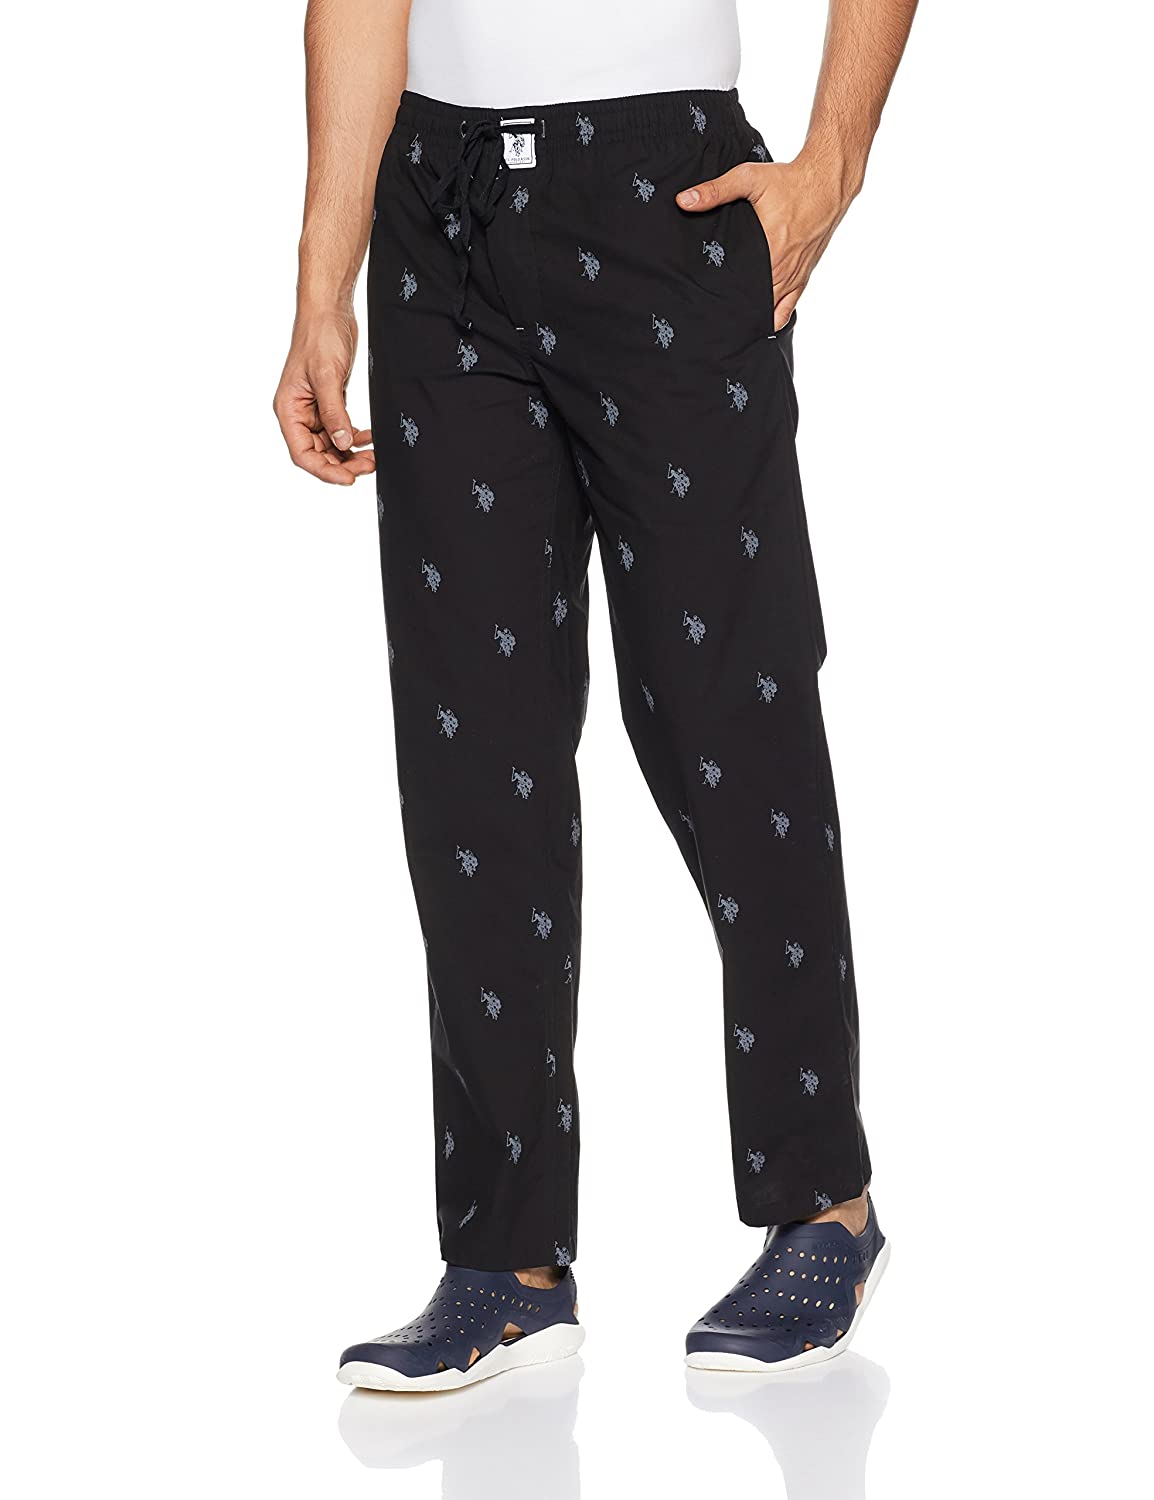 US Polo Black Pyjama Lower Night wear for Men - Stilento